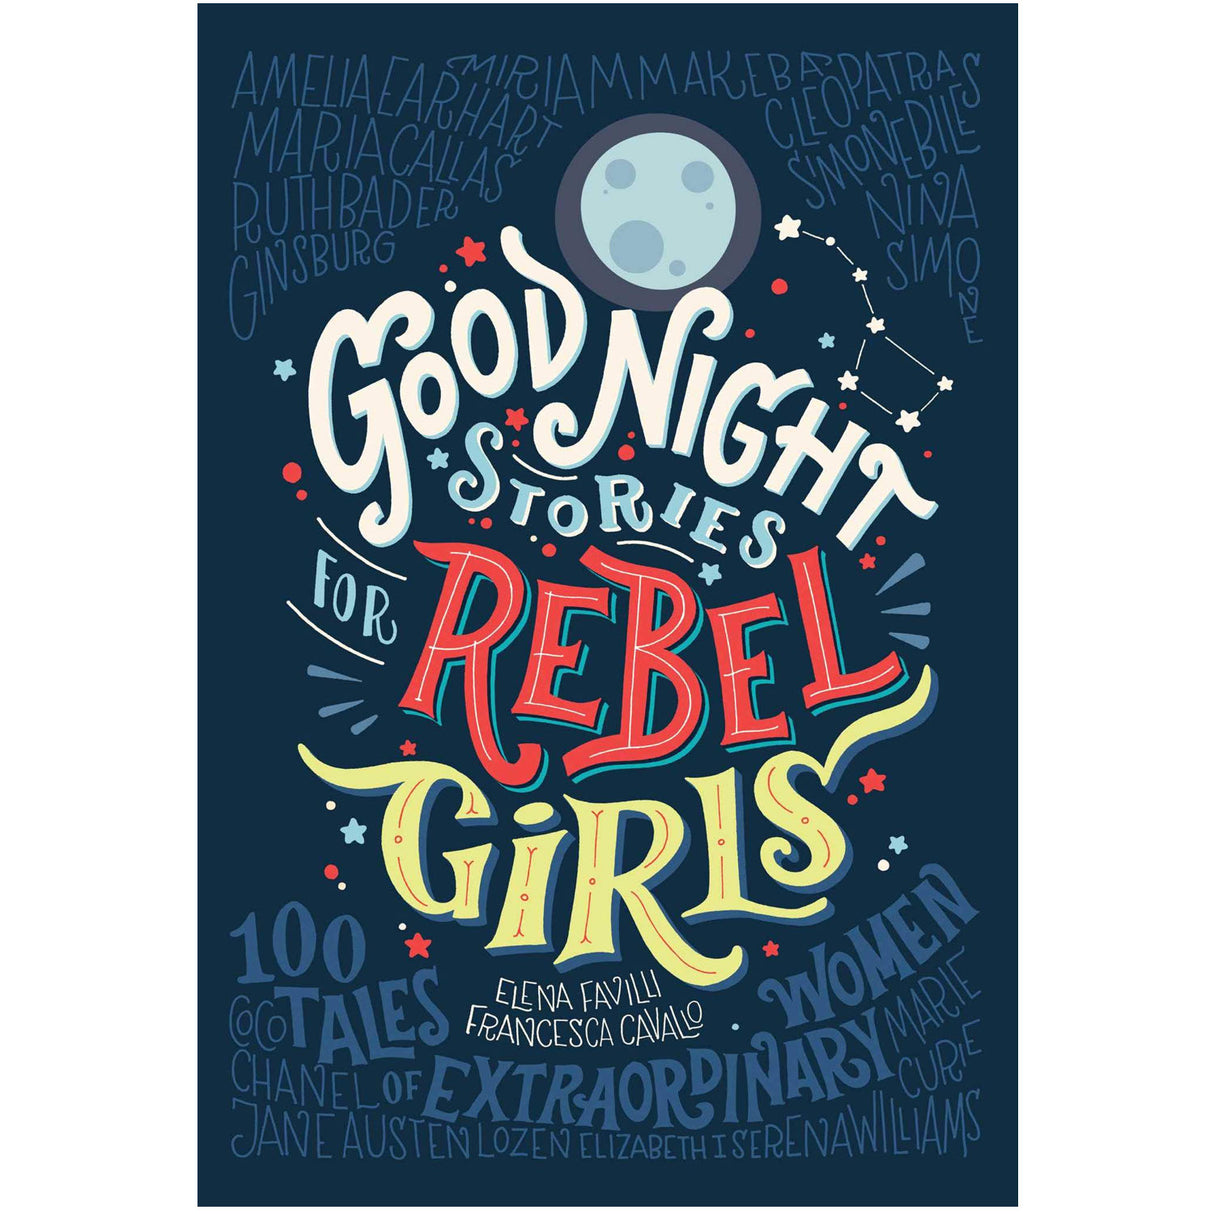 Good Night Stories For Rebel Girls: 100 Tales of Extraordinary Women